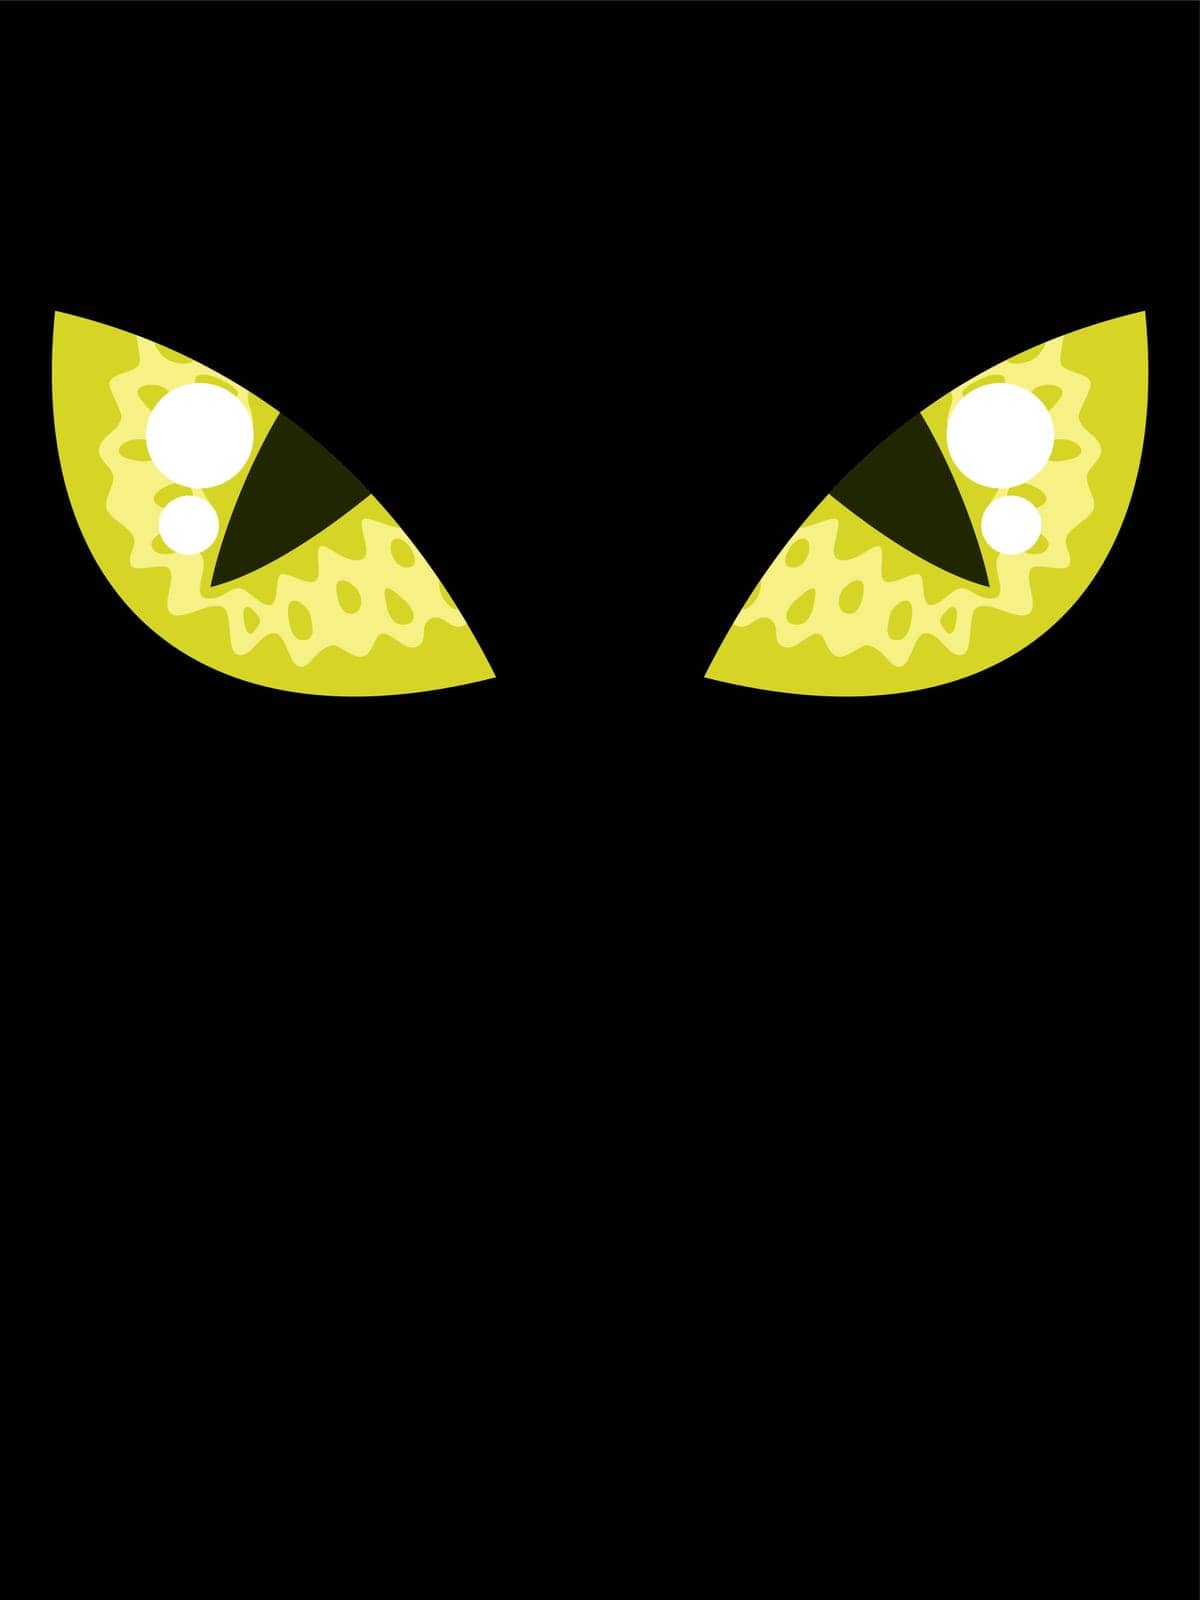 Black background with cartoon cat eyes.